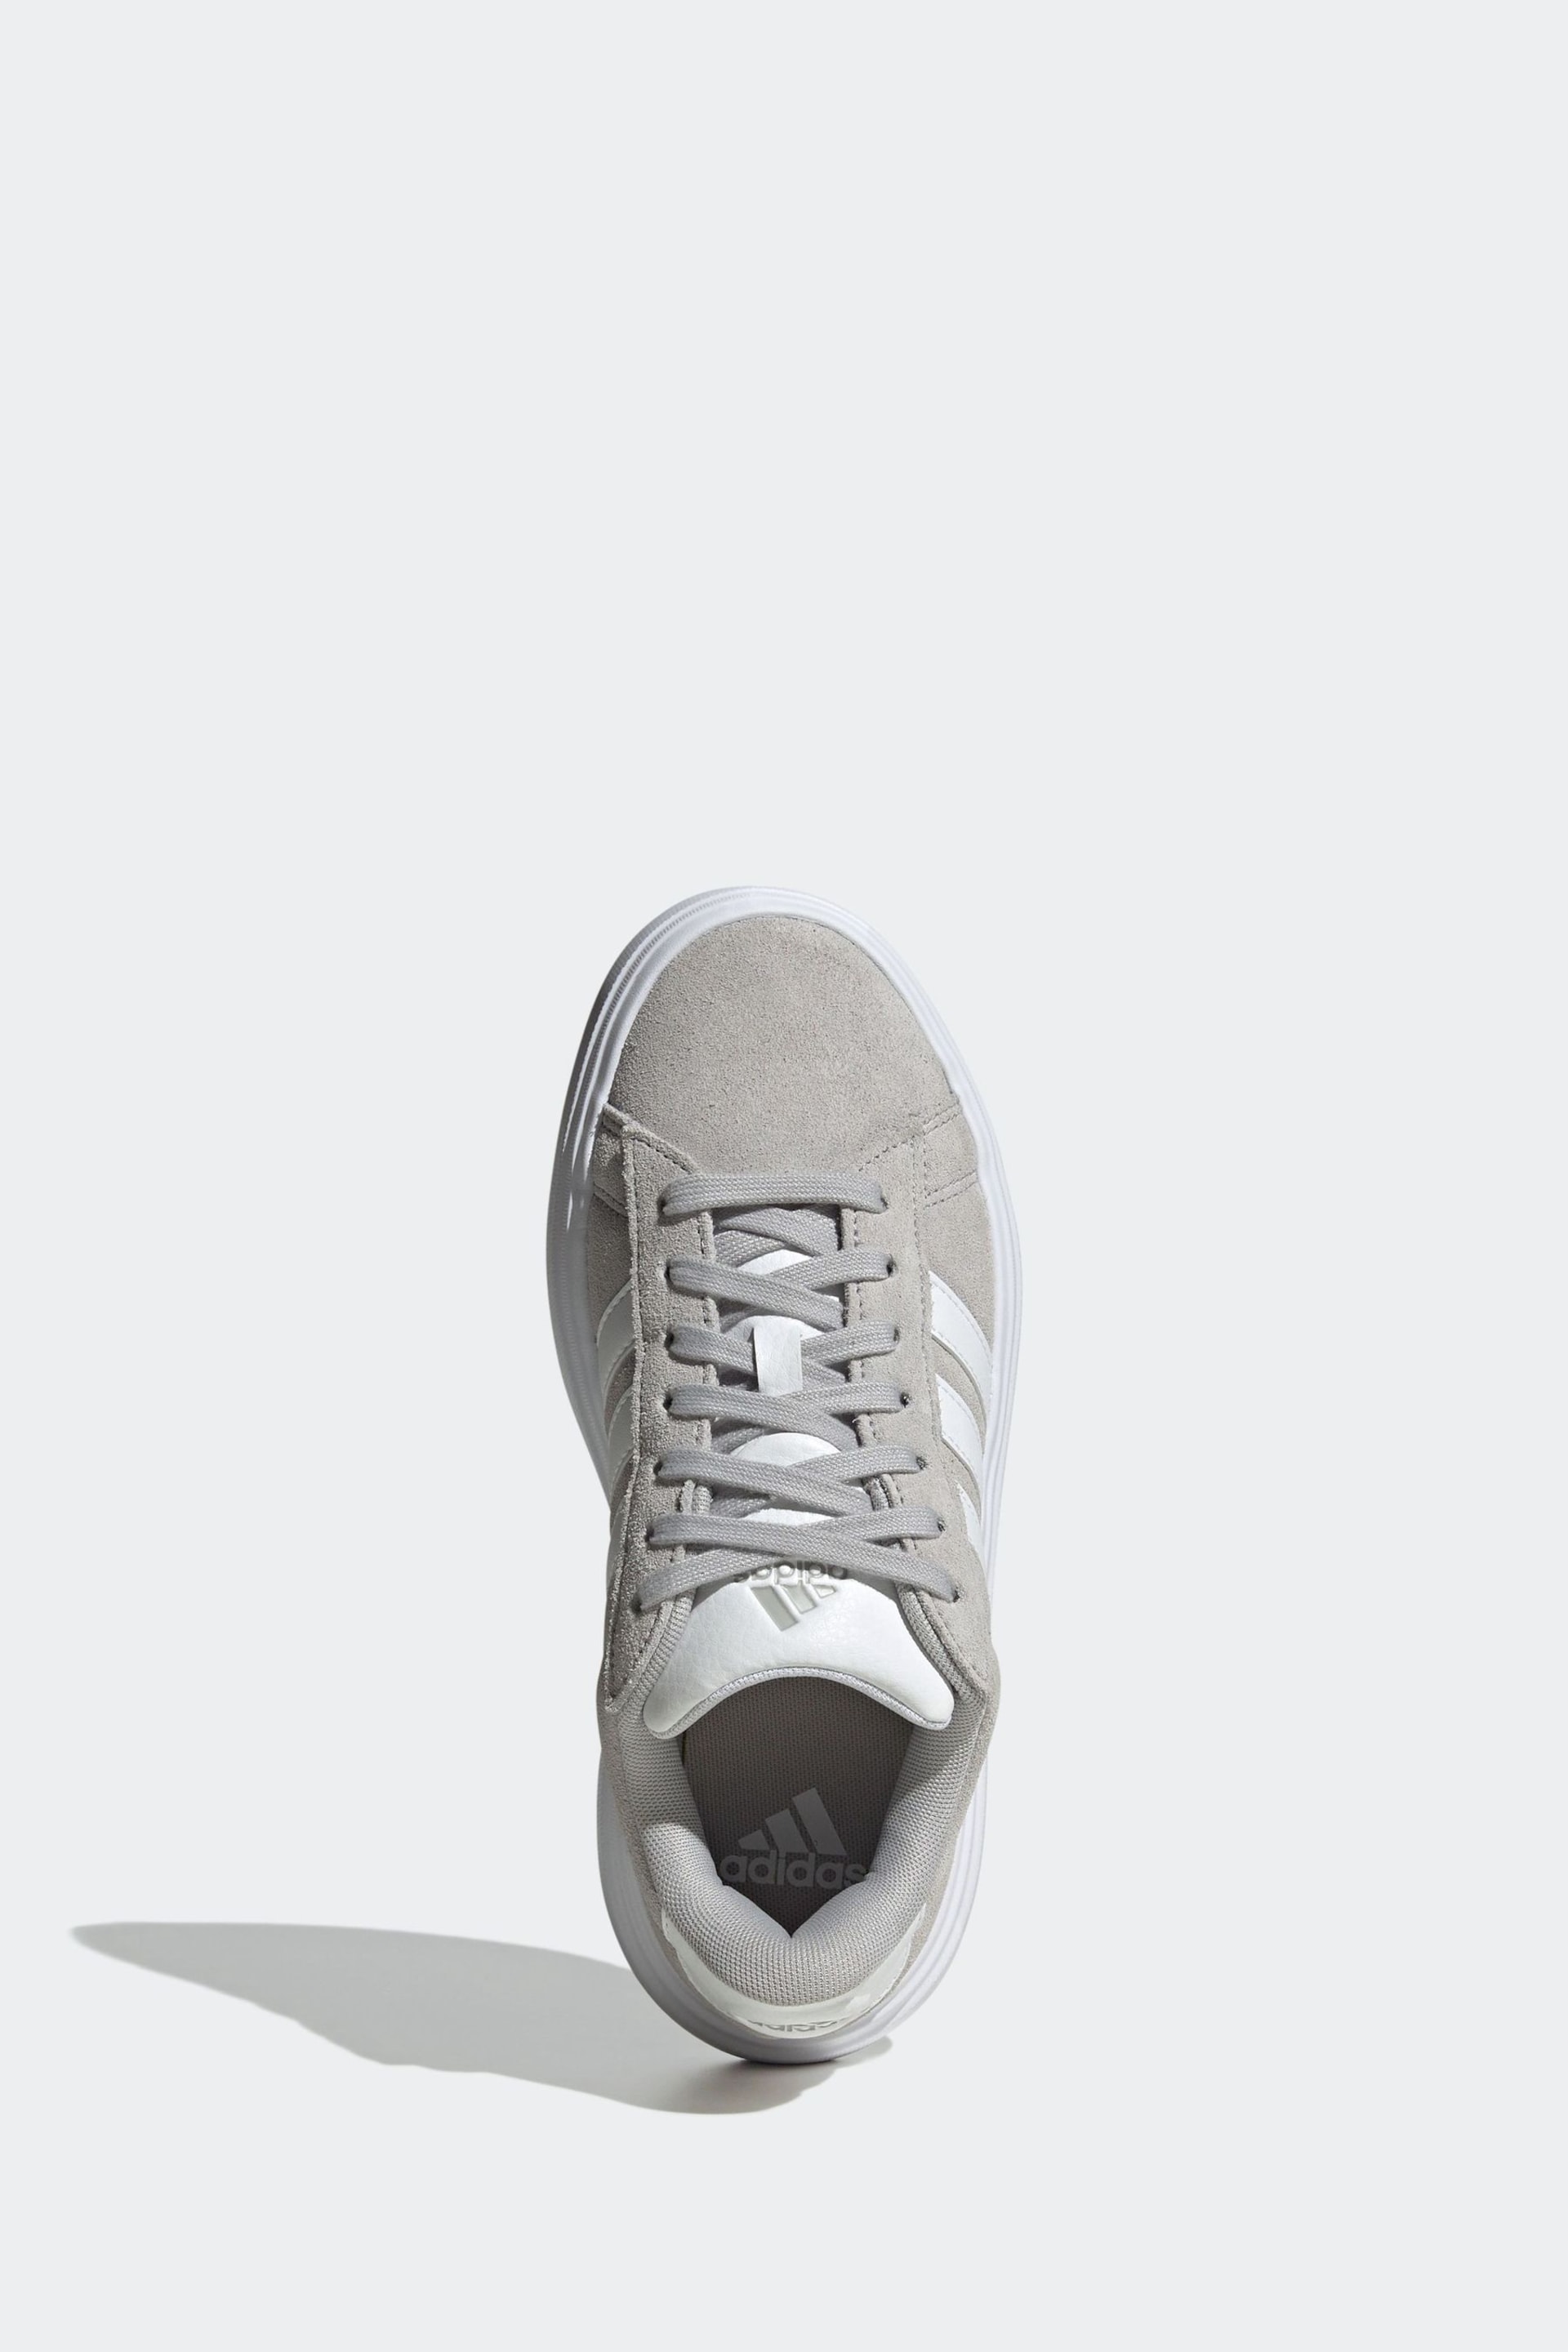 adidas Grey Grand Court Platform Suede Shoes - Image 6 of 9